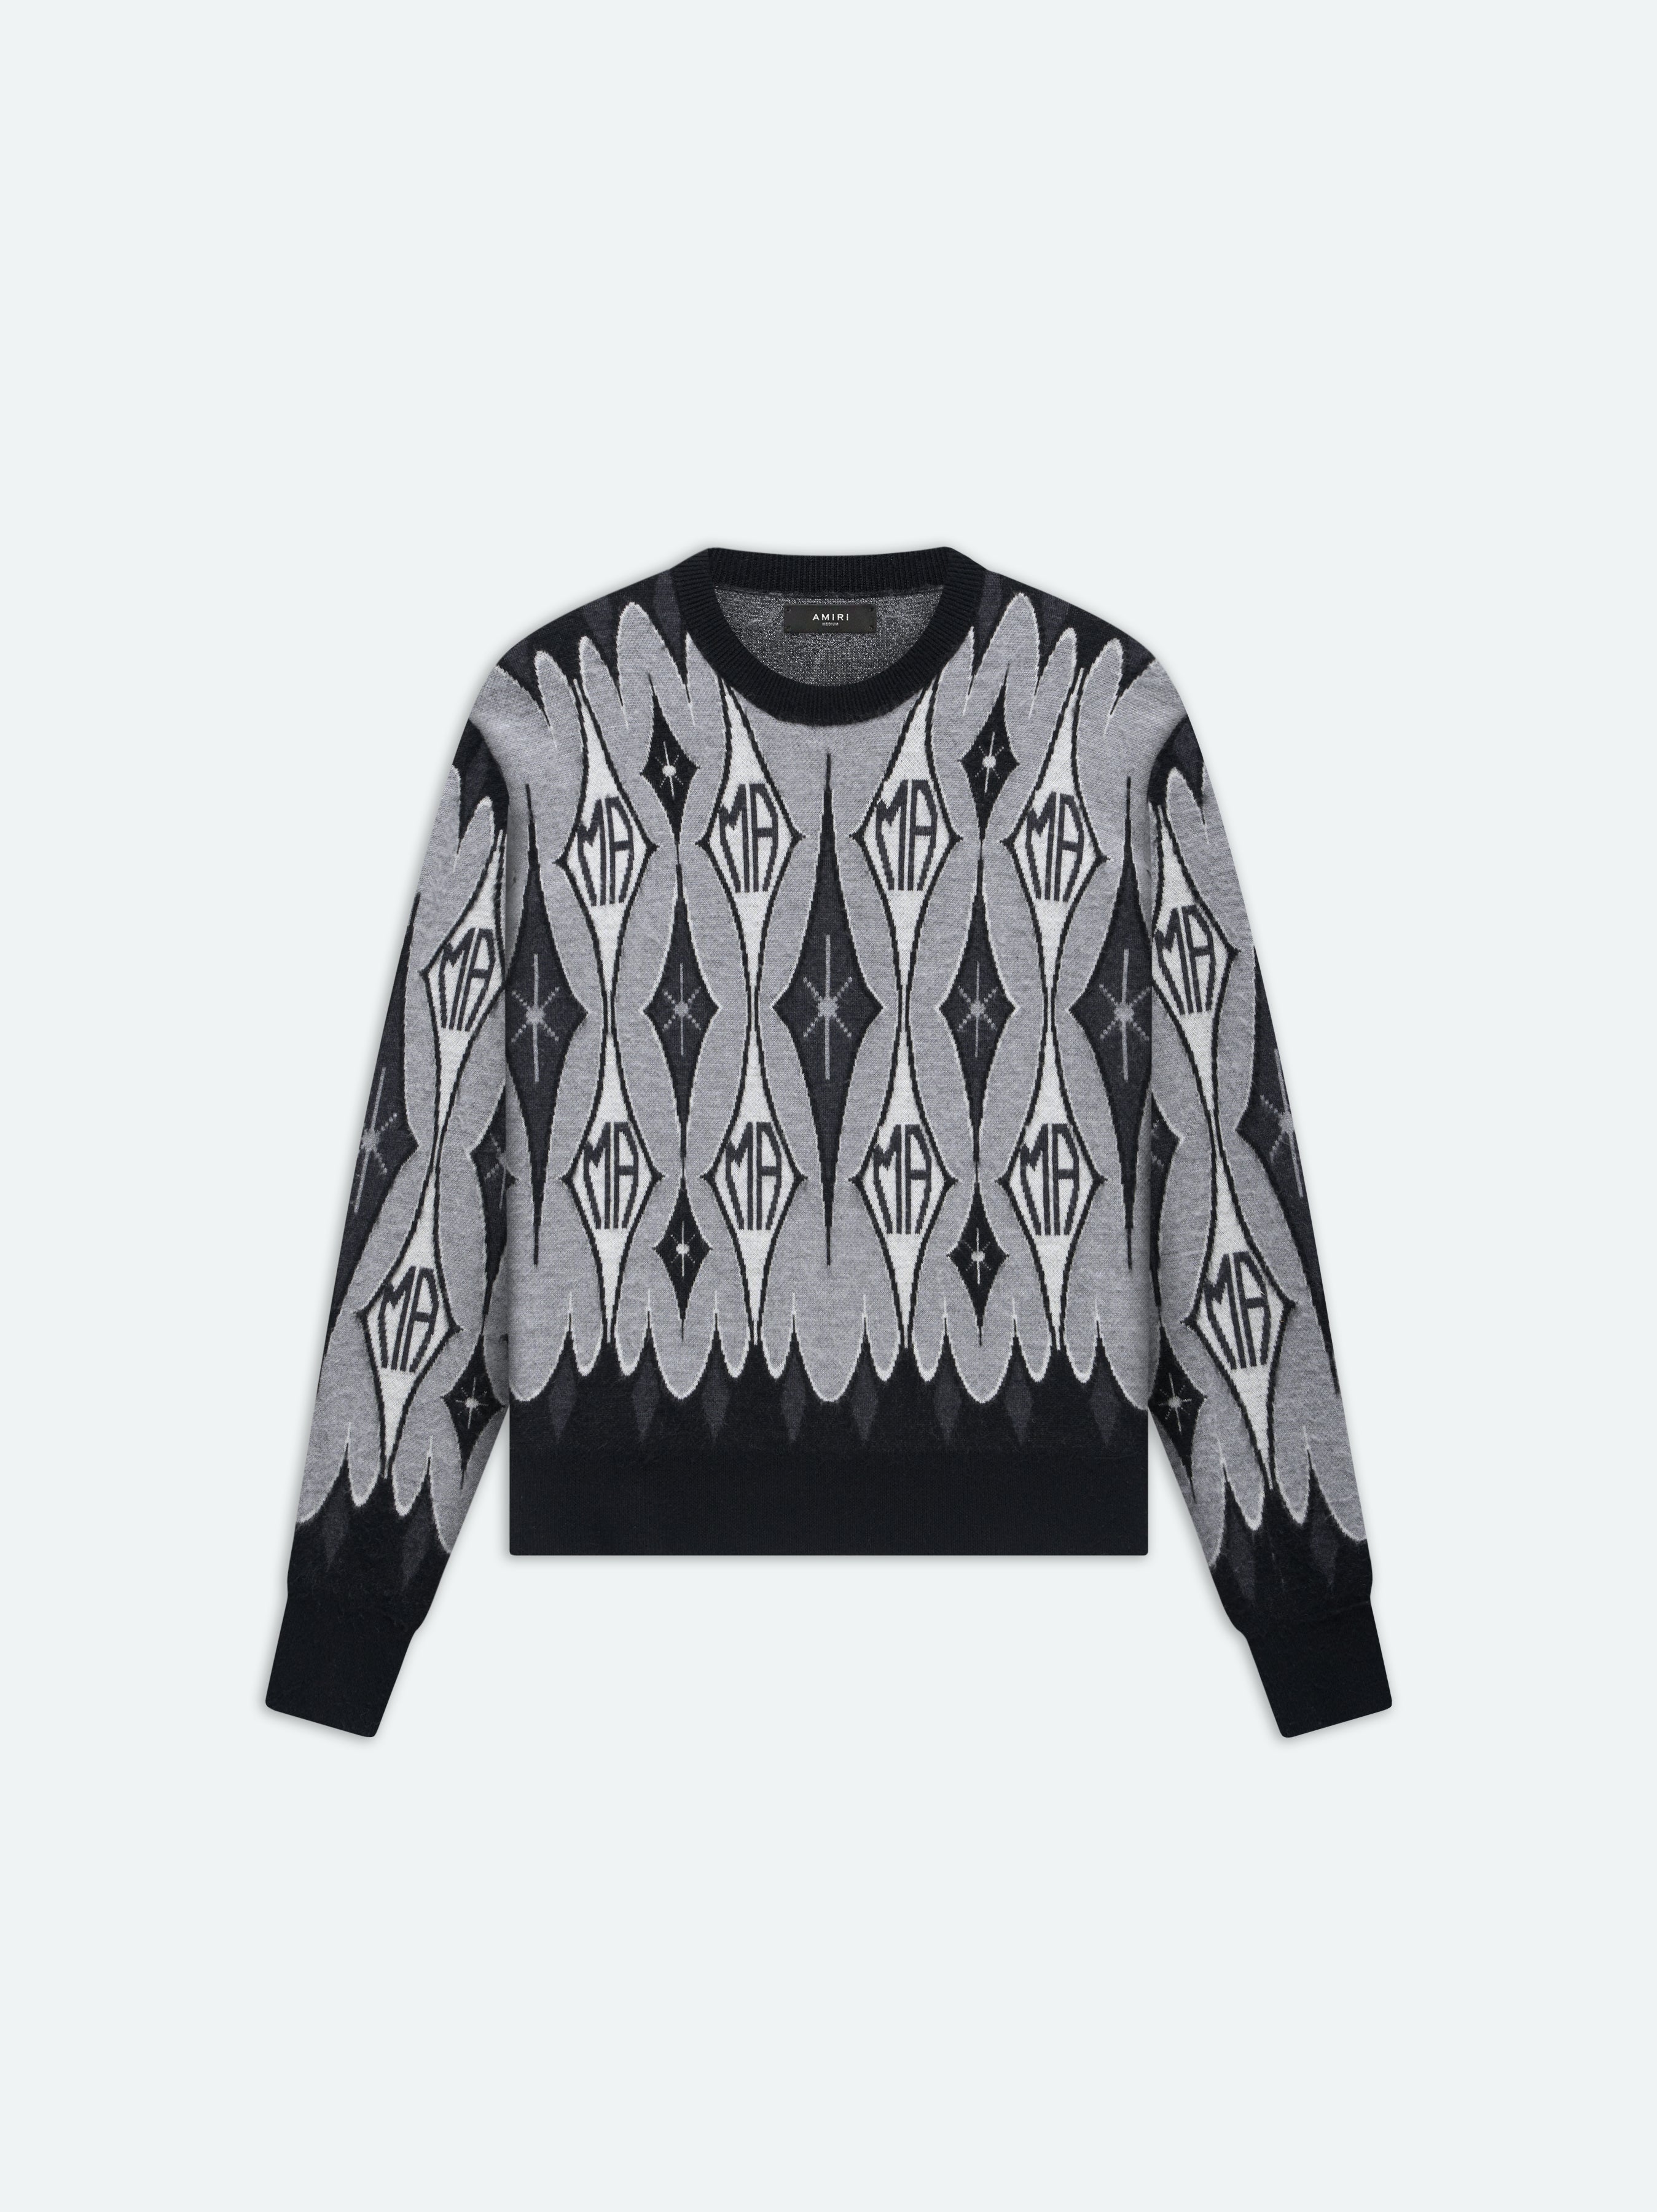 Louis Vuitton, Shirts, Louis Vuitton Monogram Jacquard Pink Sweatshirt  Size Small Runway Line